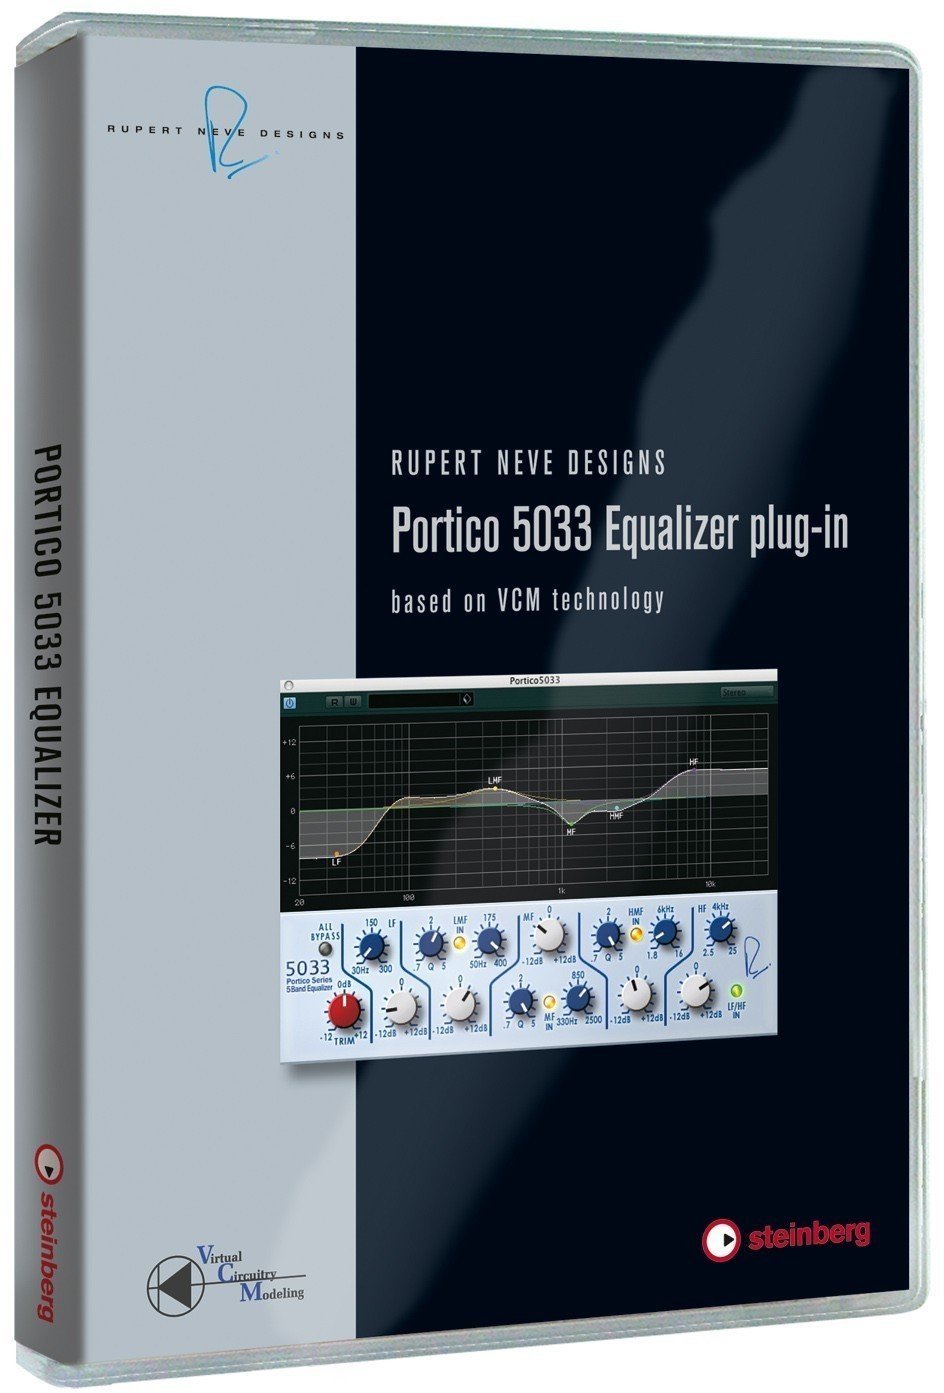 Studio-Software Steinberg RND Portico 5033 EQ